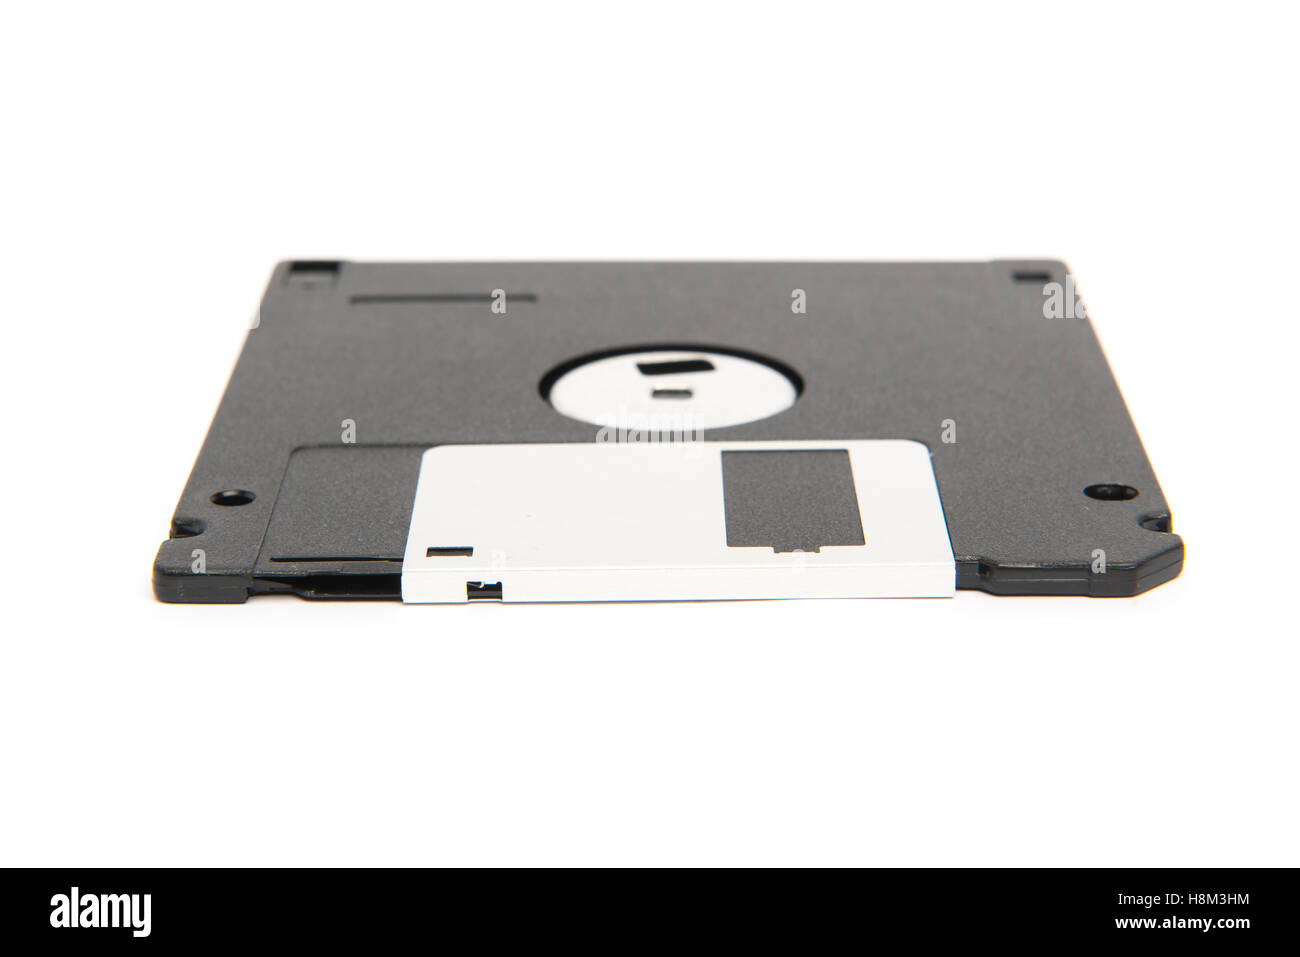 Isolated 3 1/2' floppy disk Stock Photo